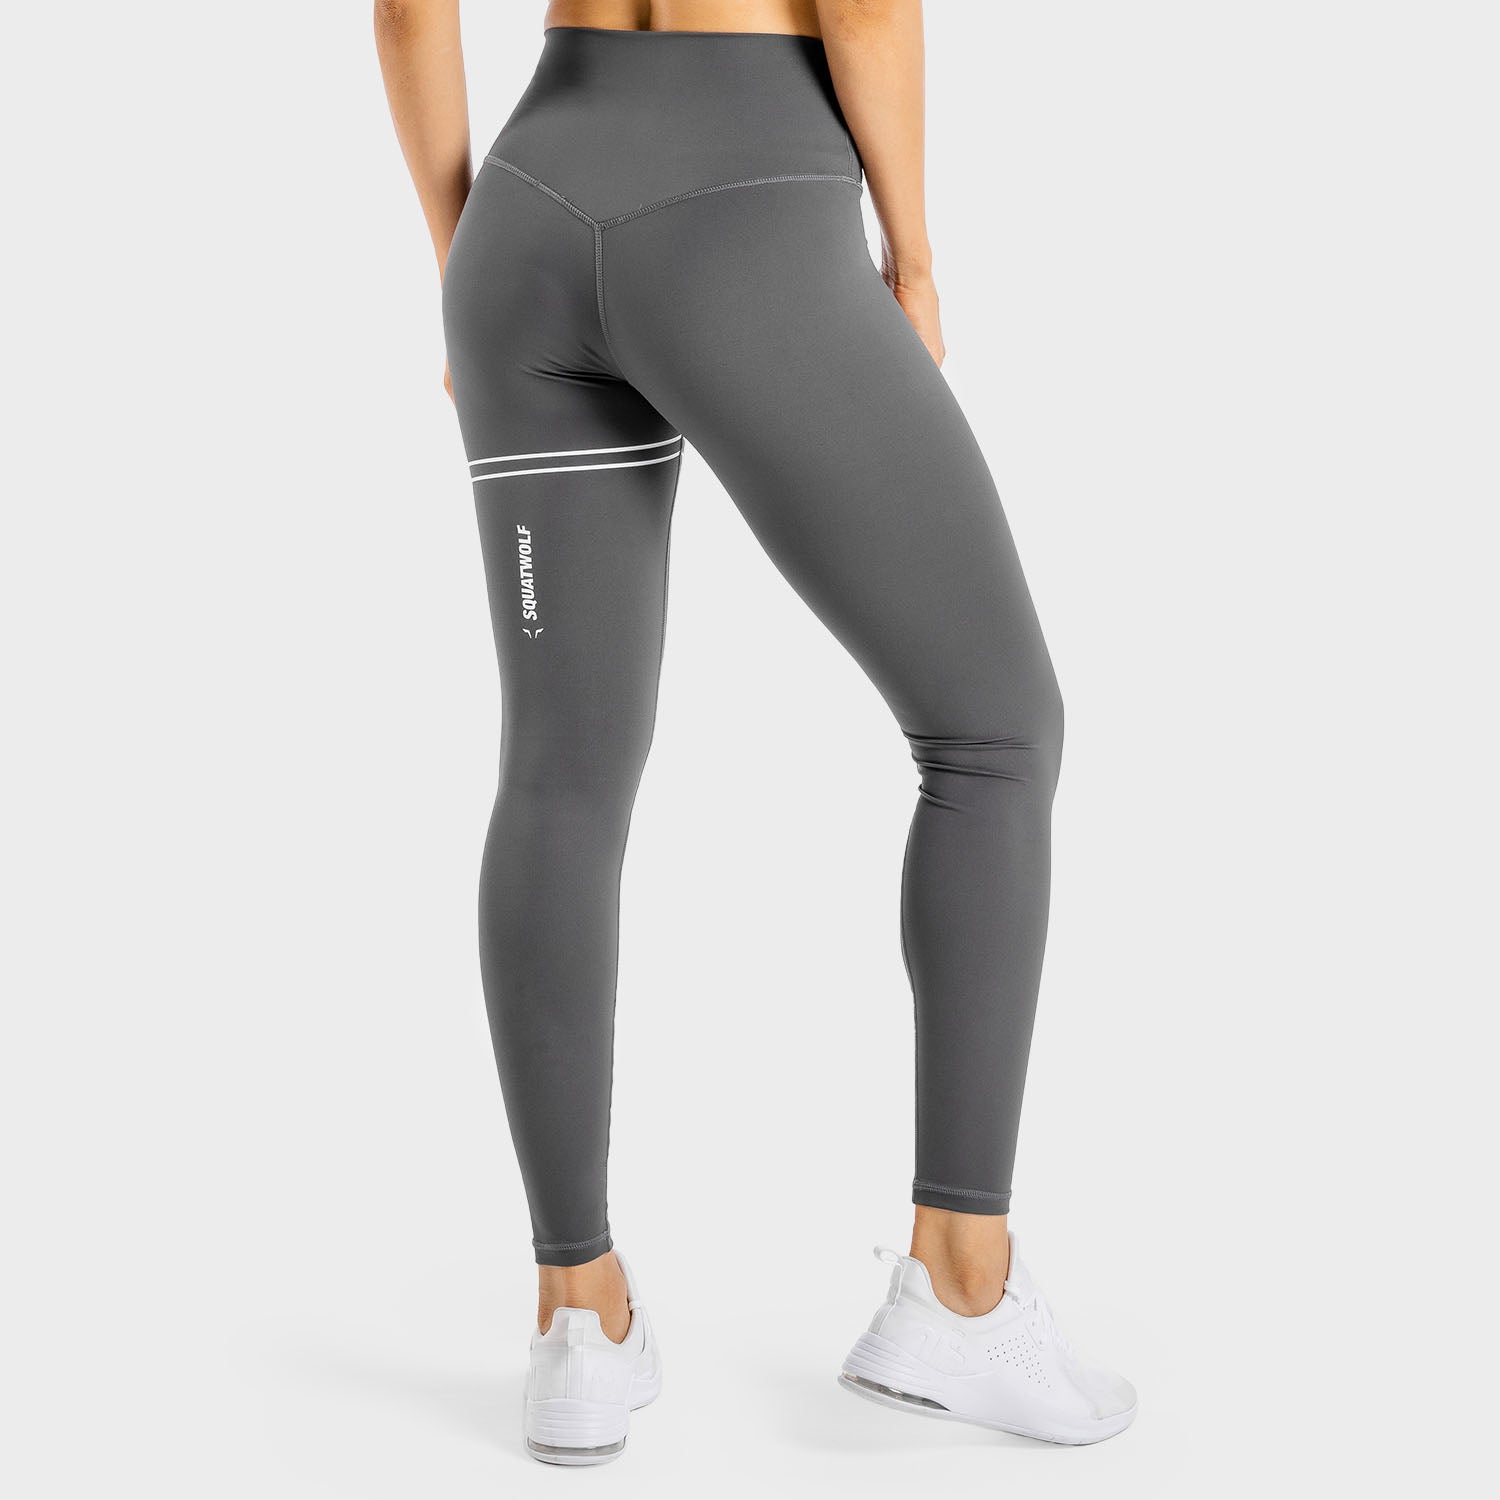 squatwolf-workout-clothes-flux-leggings-charcoal-gym-leggings-for-women